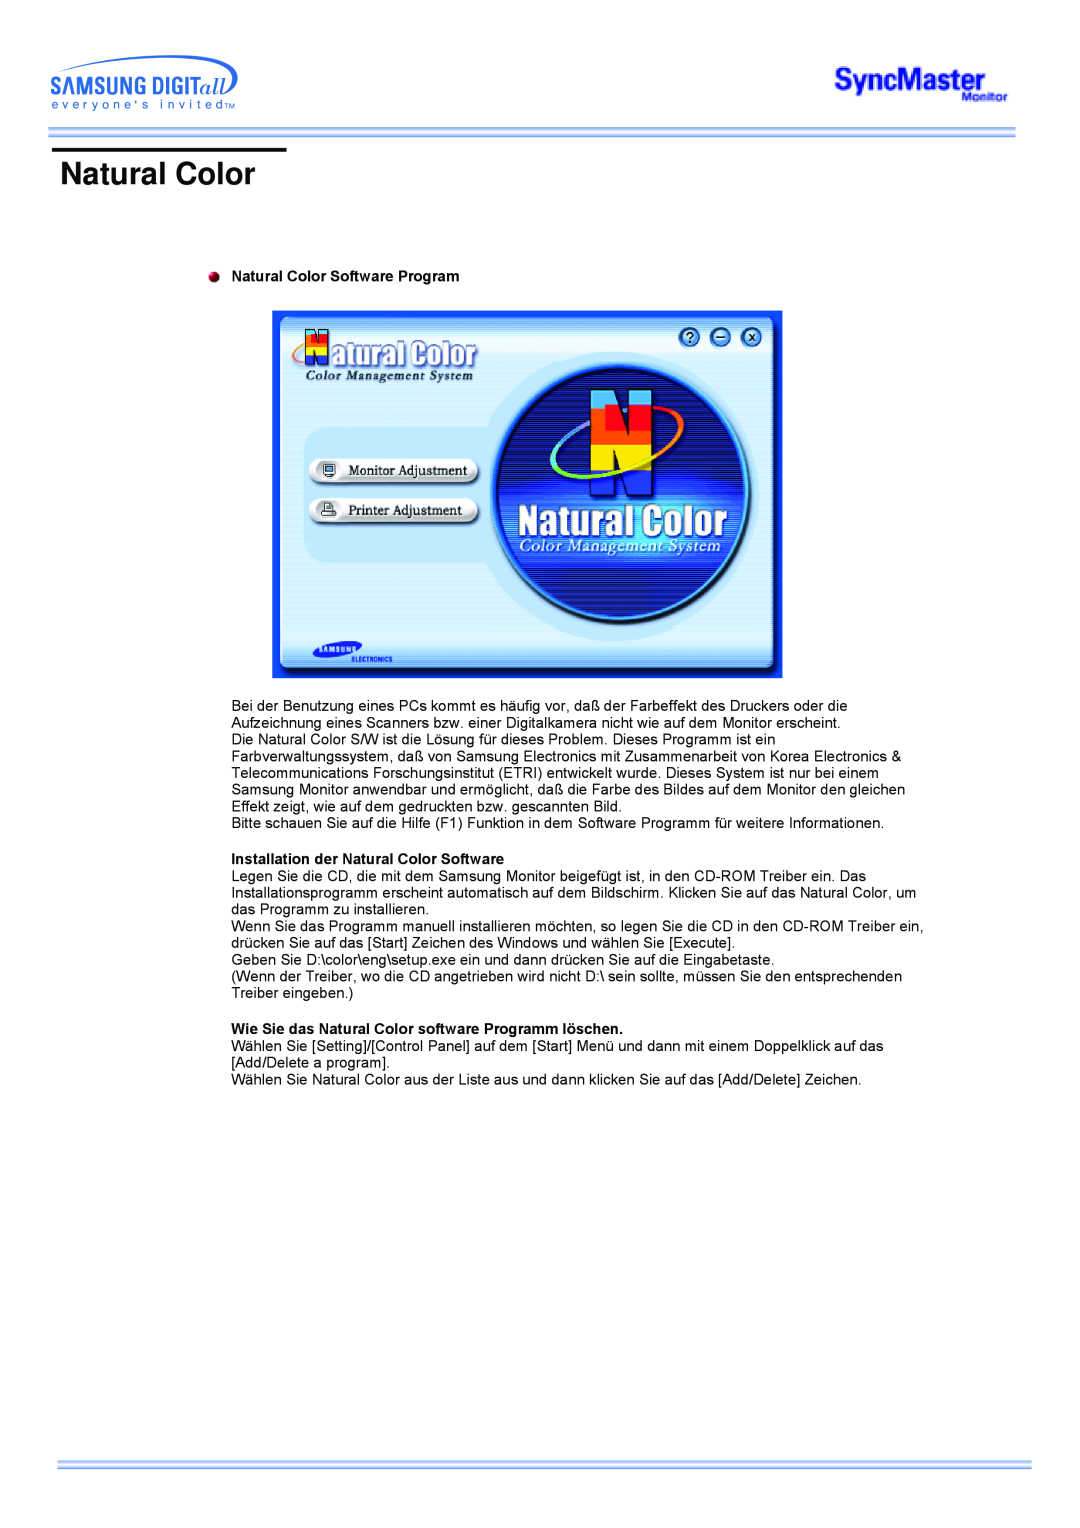 Samsung CK40PSNSG/EDC, CK40PSNB/EDC manual Natural Color Software Program, Installation der Natural Color Software 